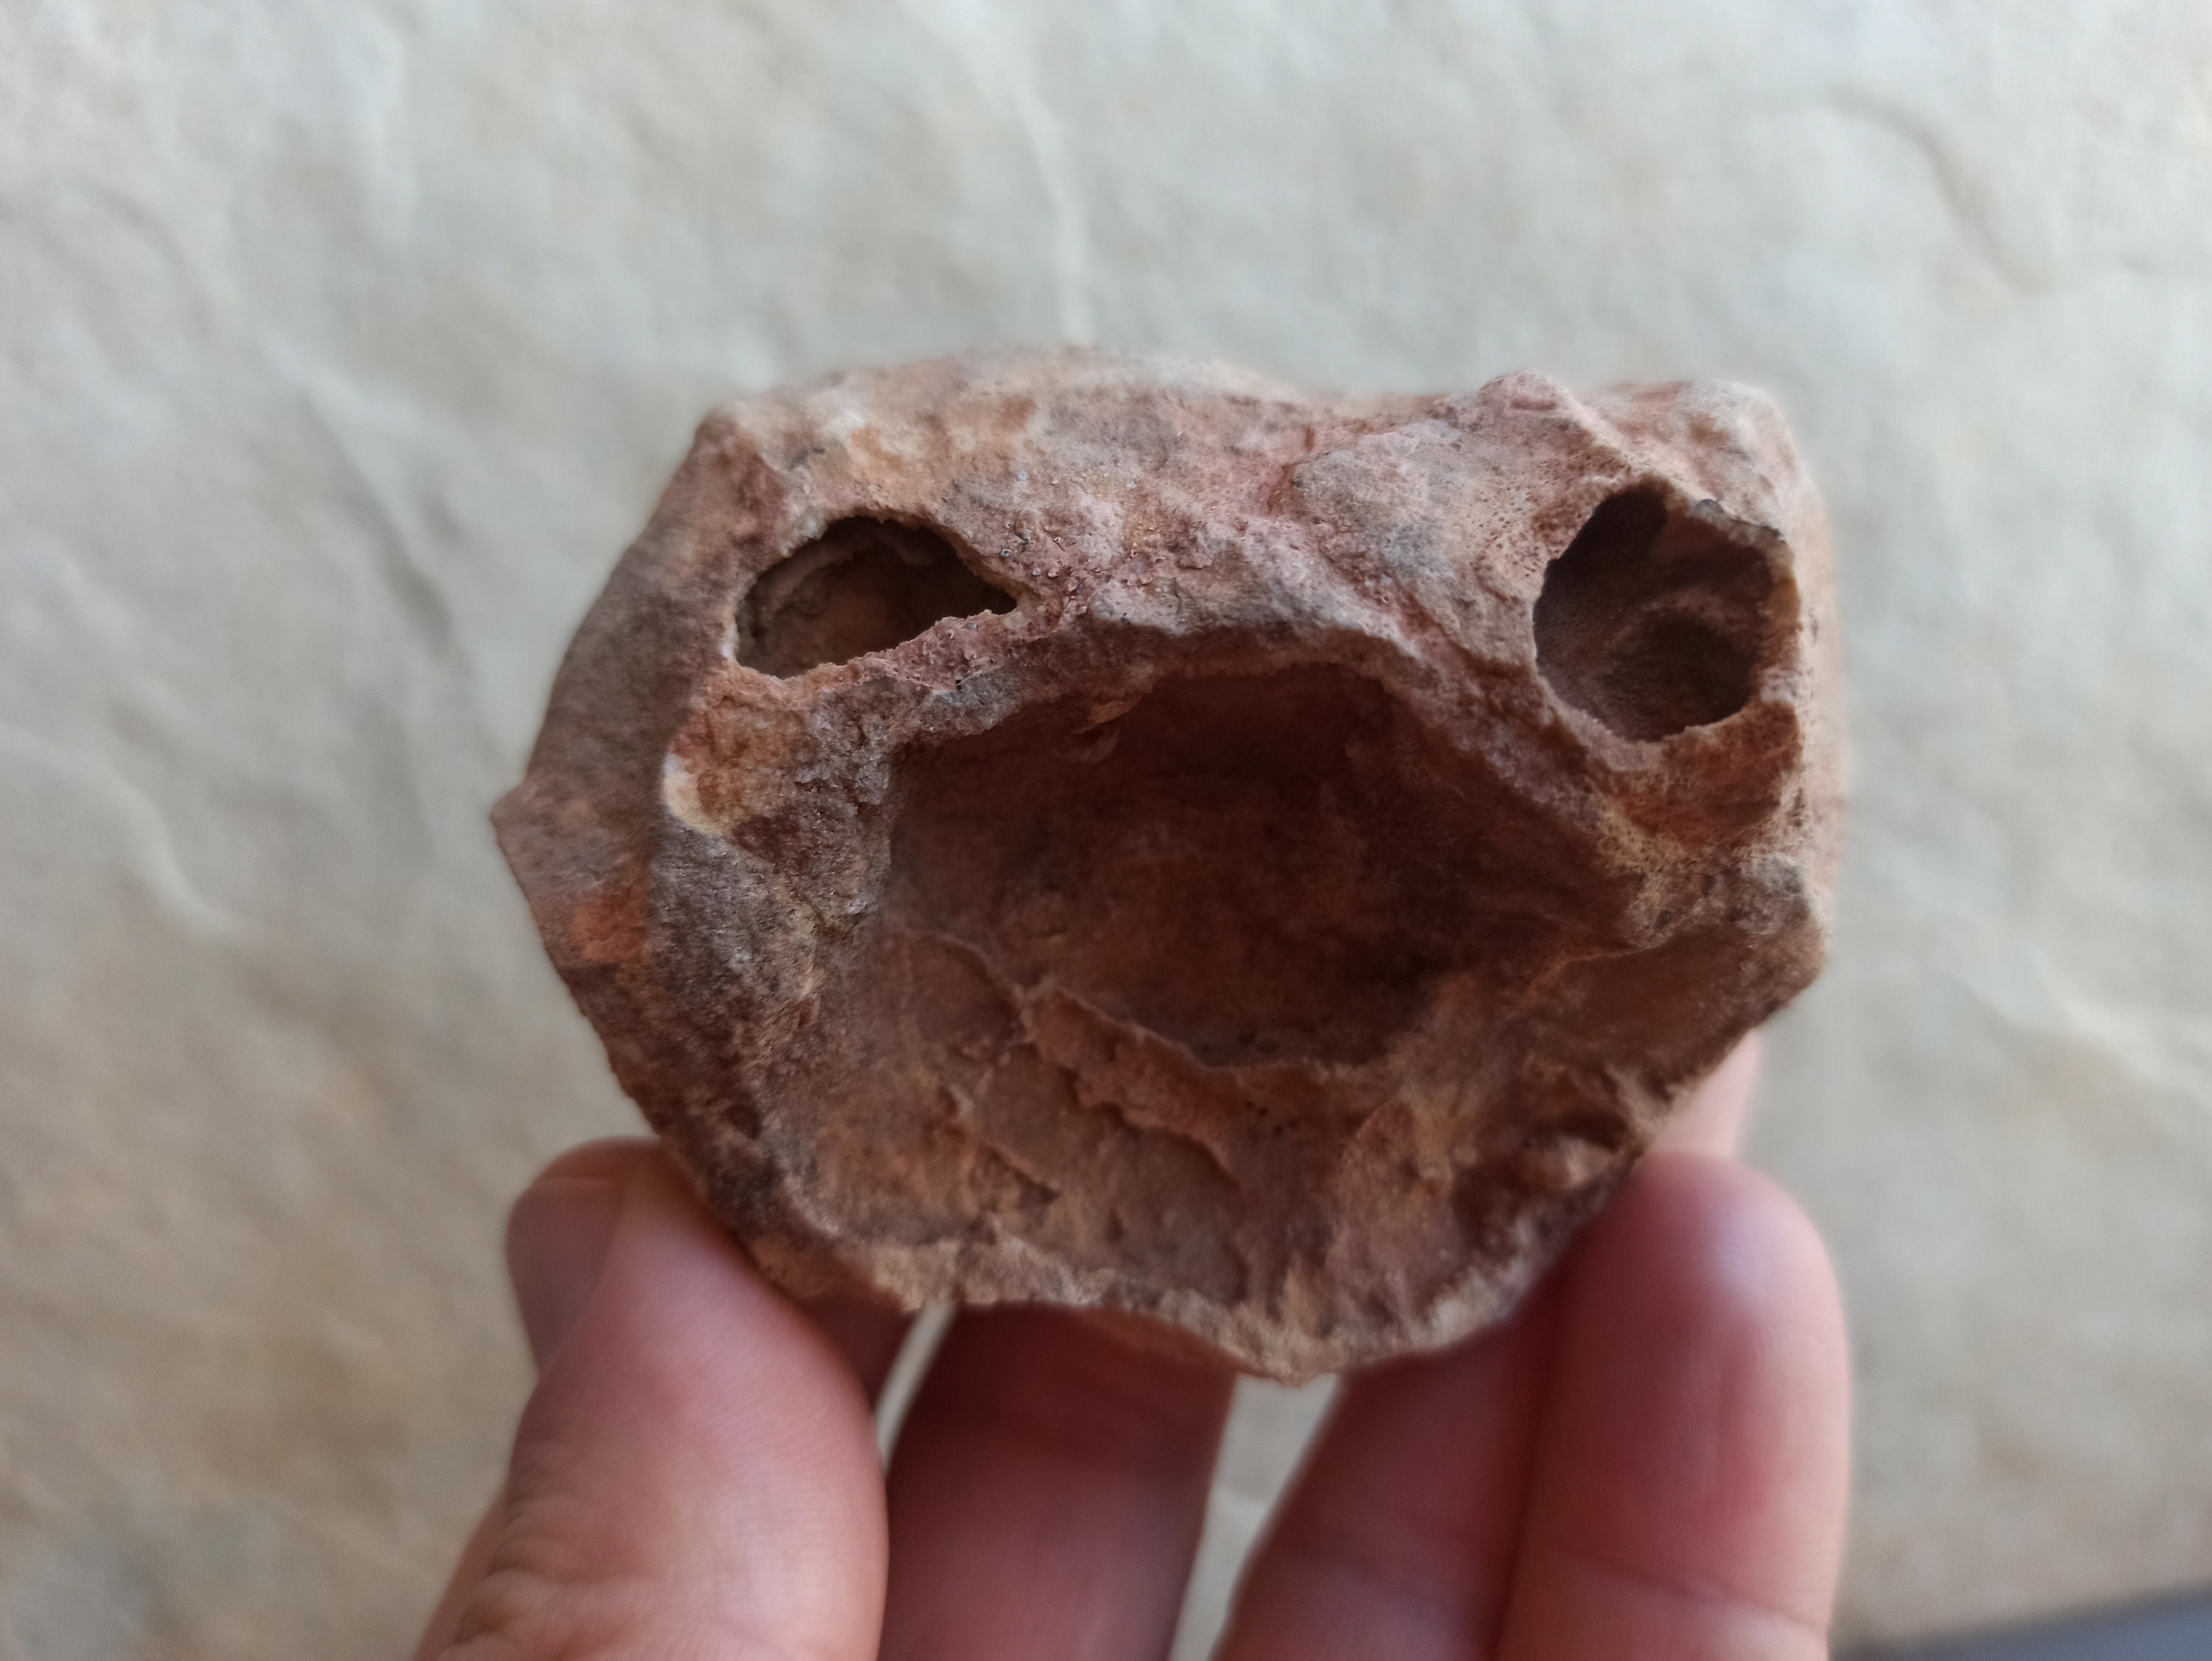 Mountain Stone Hag Stone Face Rock Toad's Head Stone Spain Rock Shaped Stone Funny Shaped Beach Stone Face Stone